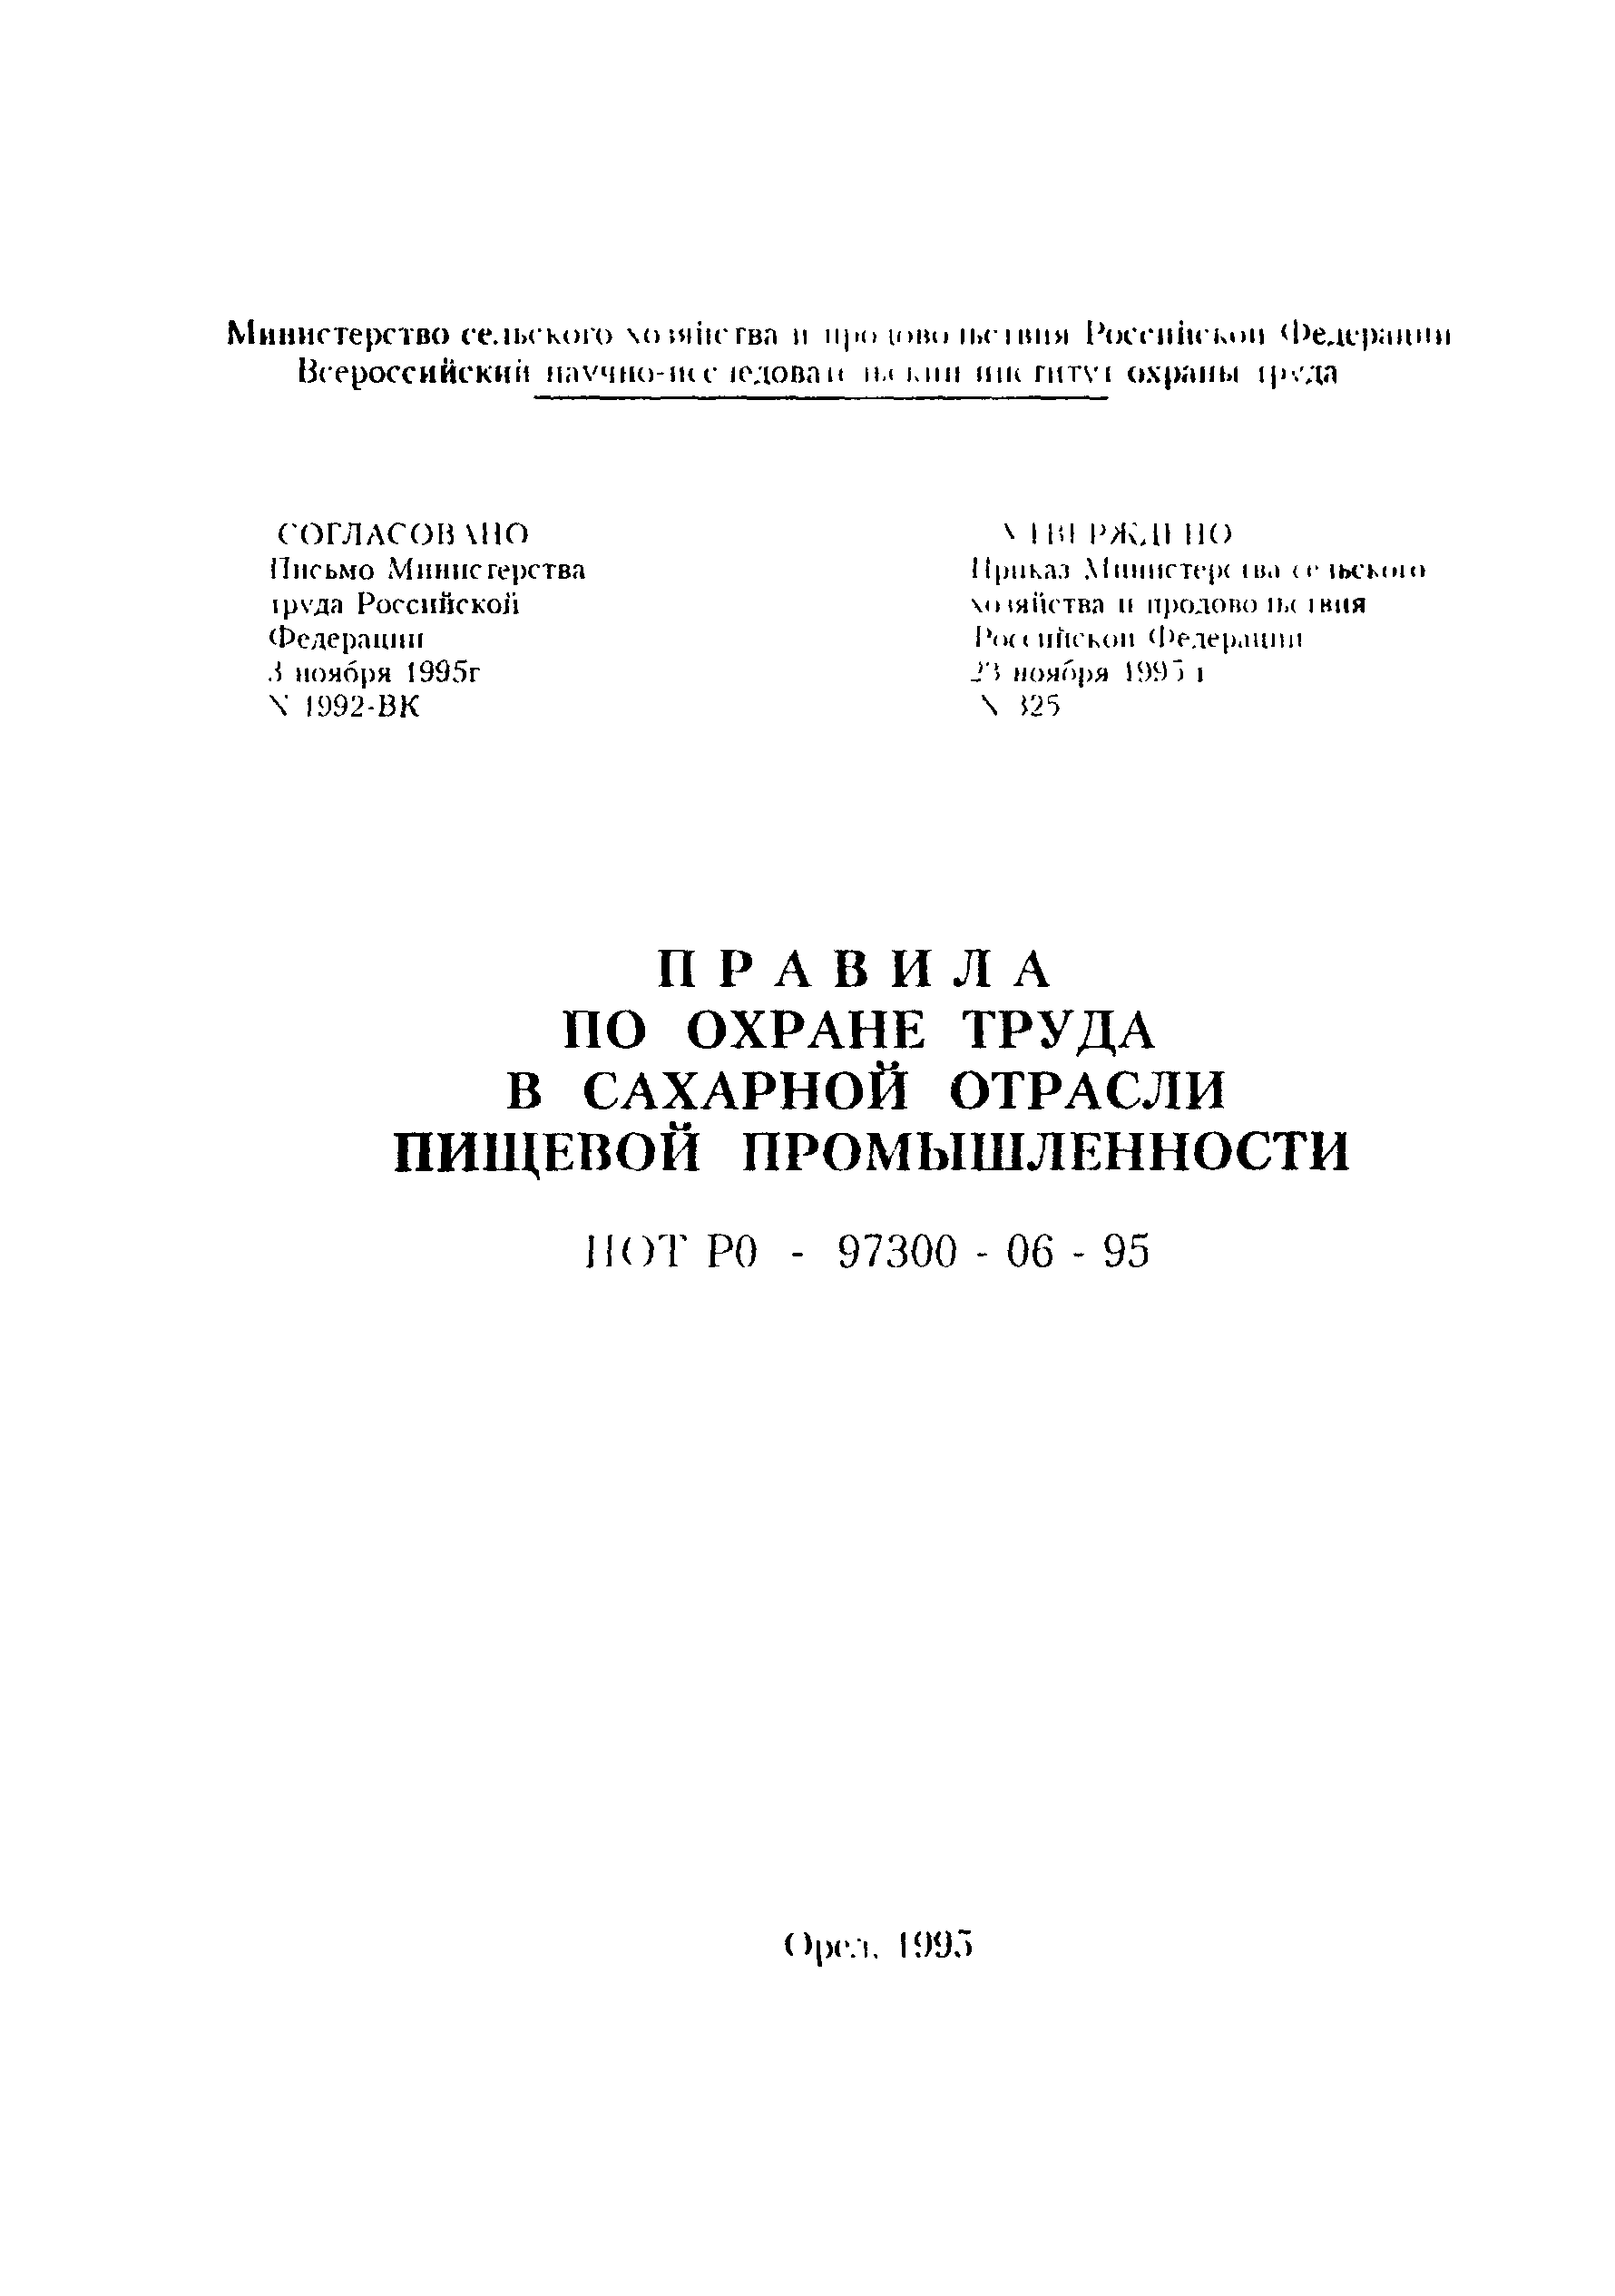 ПОТ Р О-97300-06-95